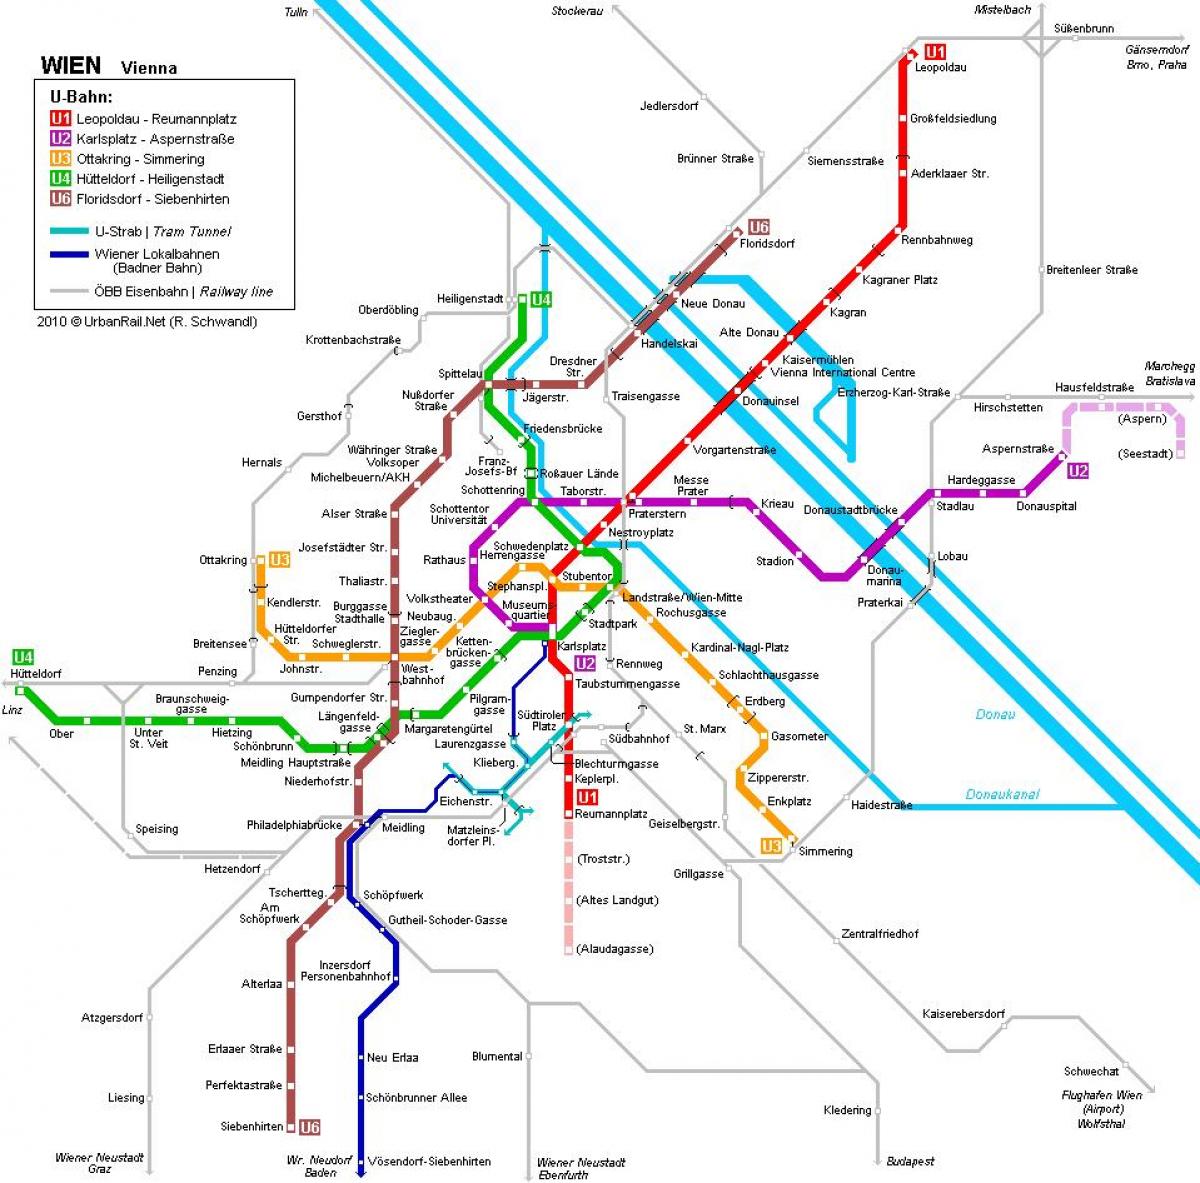 Wiedeń mapa metra